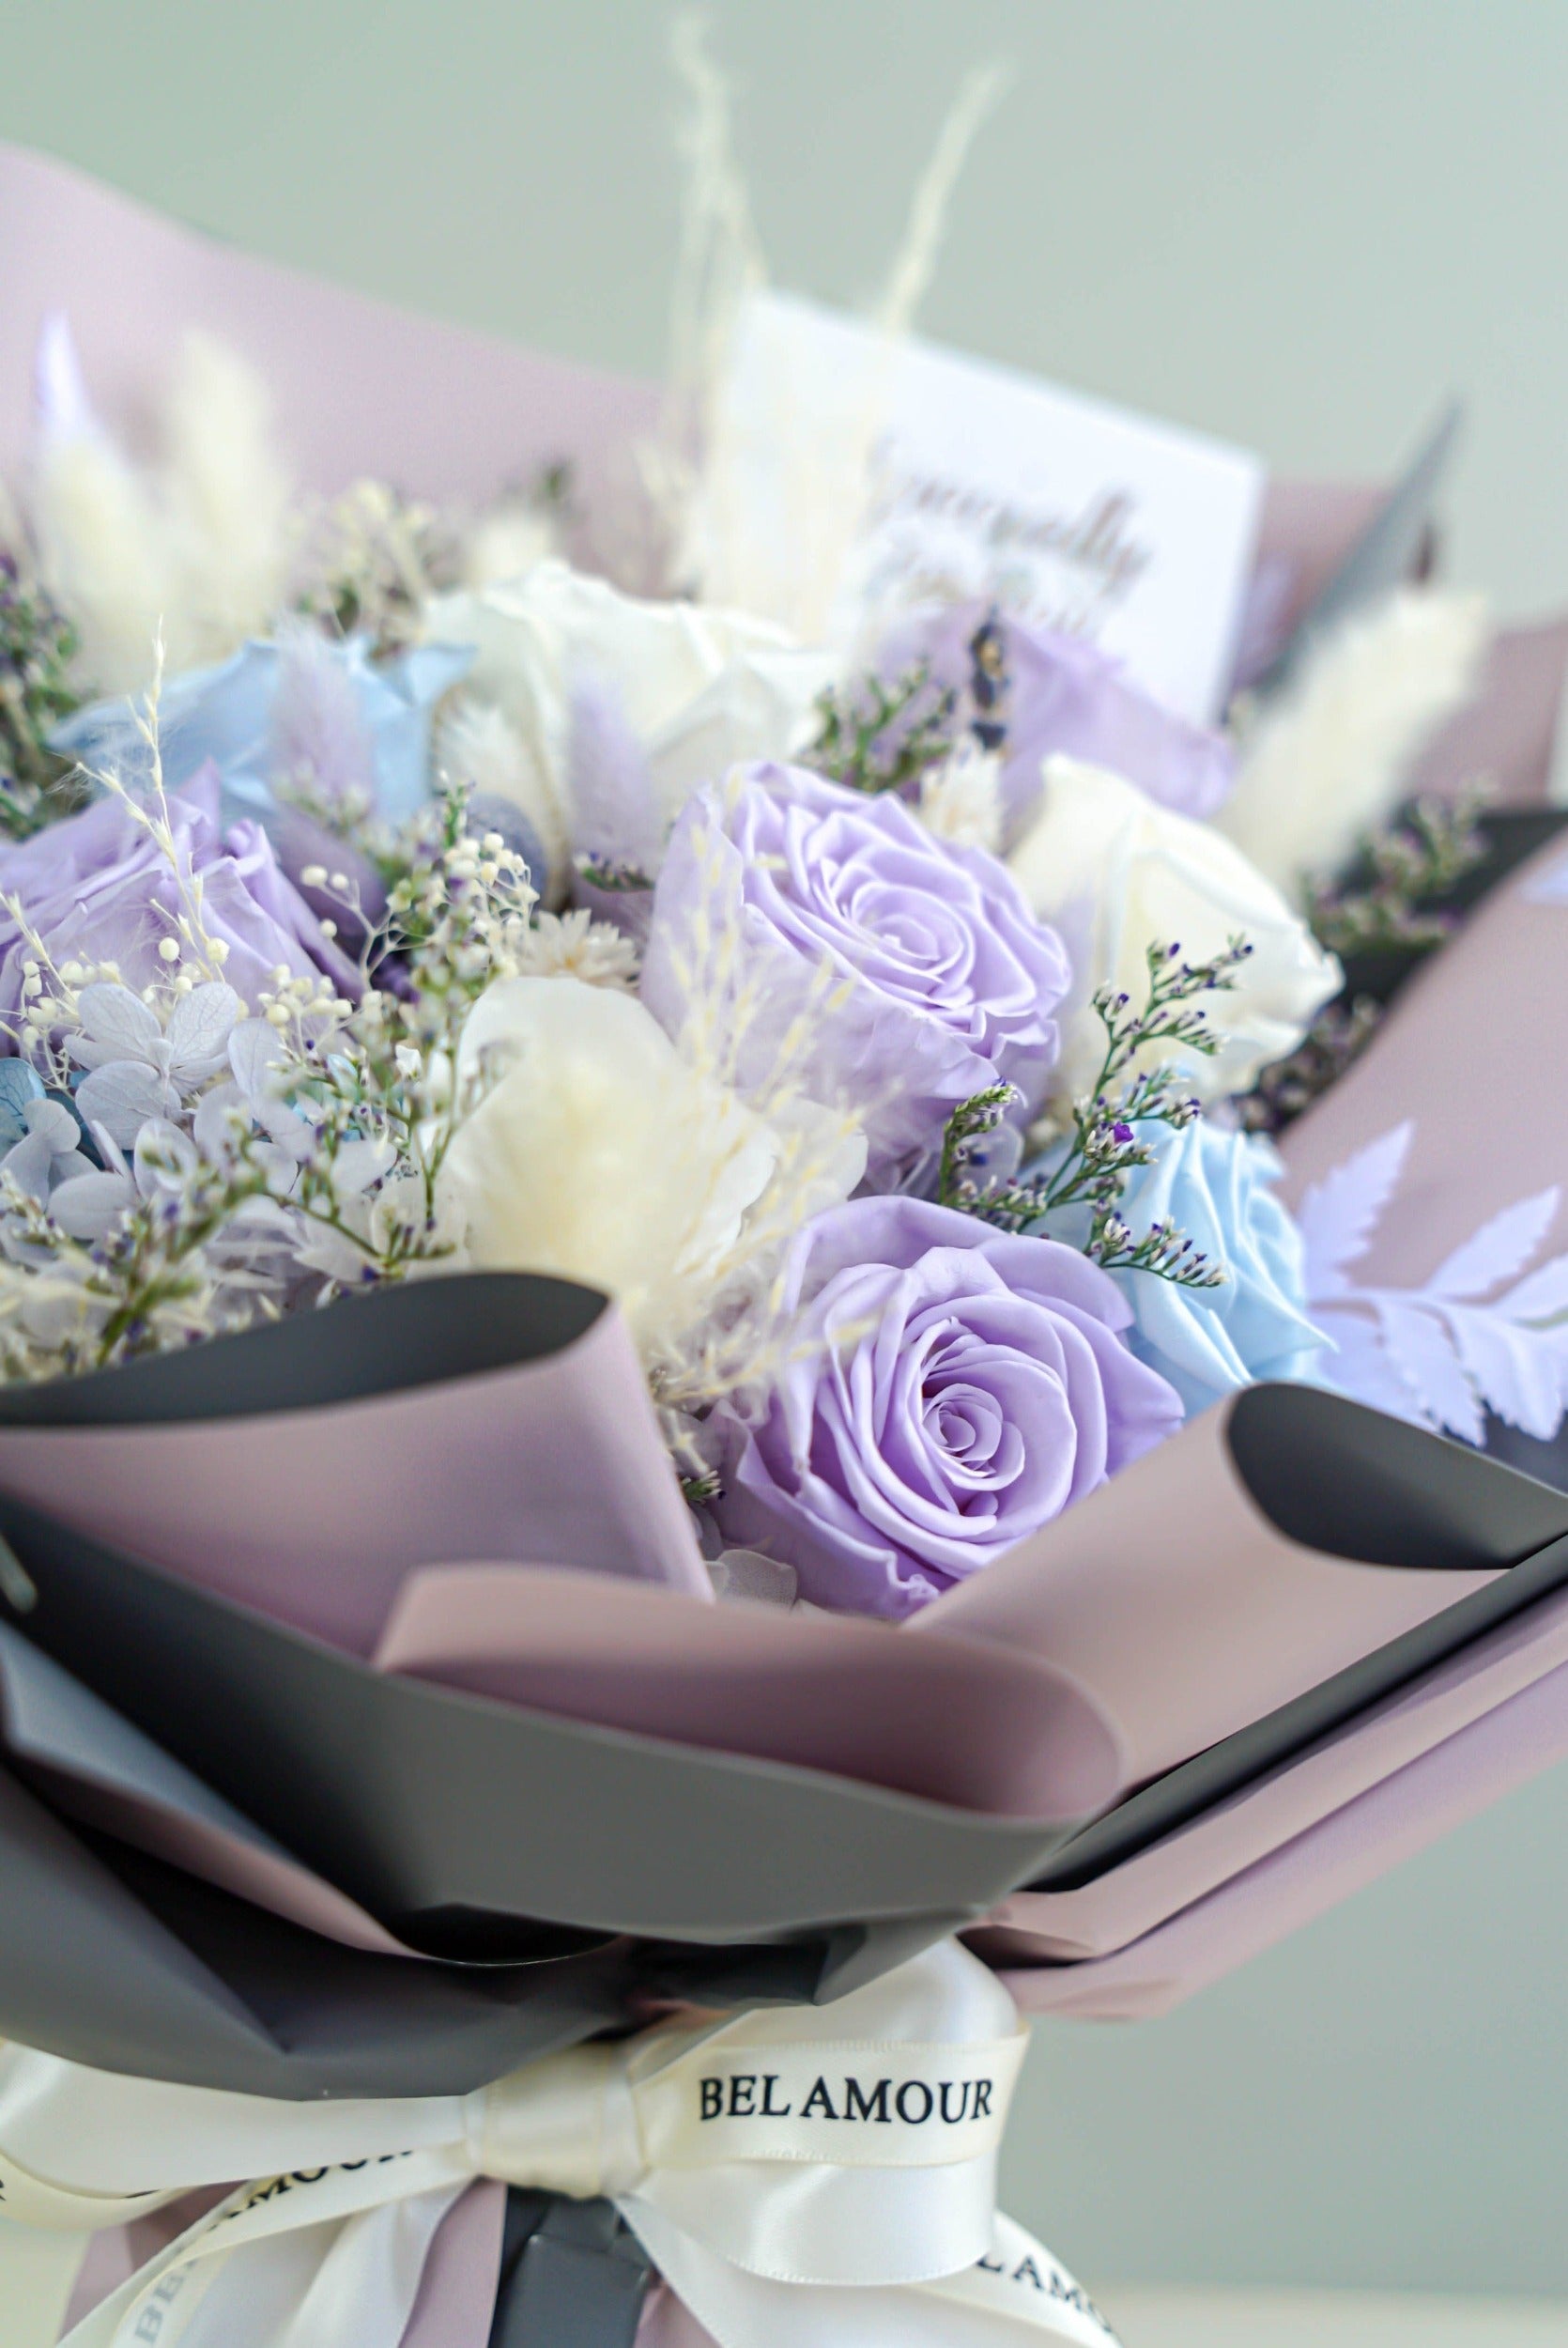 Preserved Flower Bouquet - 9 Roses (4 Lavender, 2 Sky Blue, 3 White)